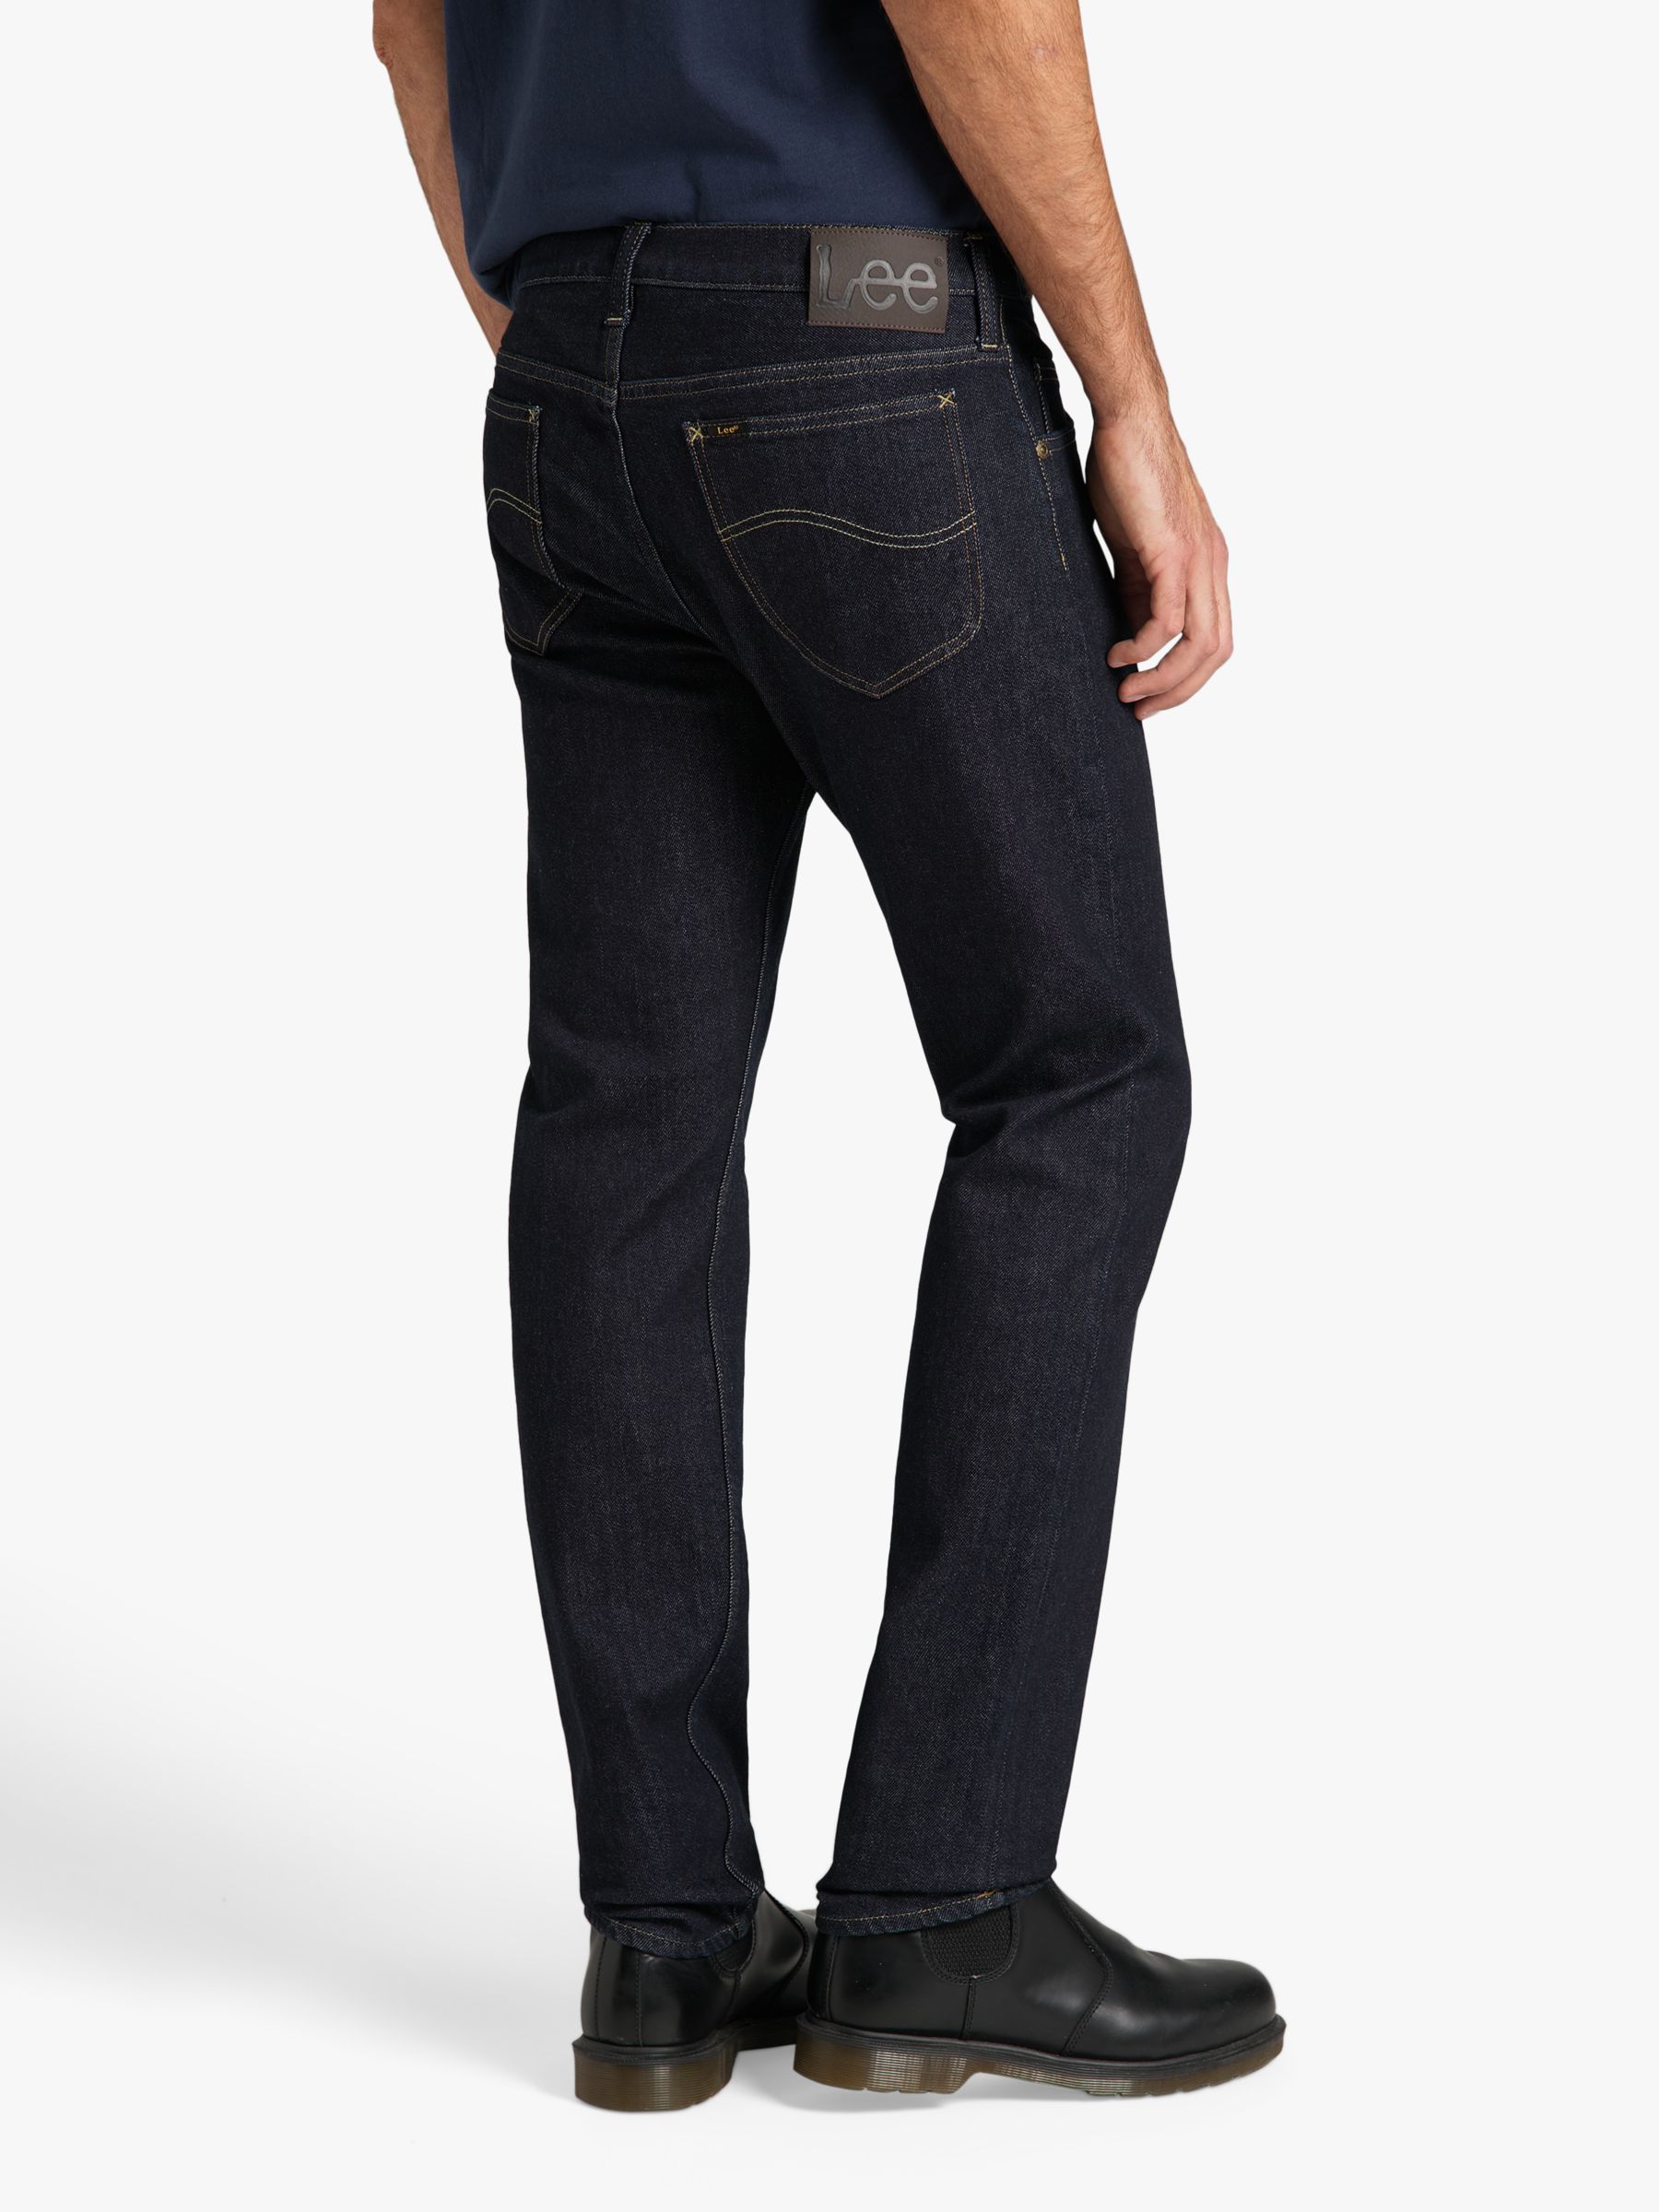 Lee Rider Slim Fit Denim Jeans, Blue, 30S